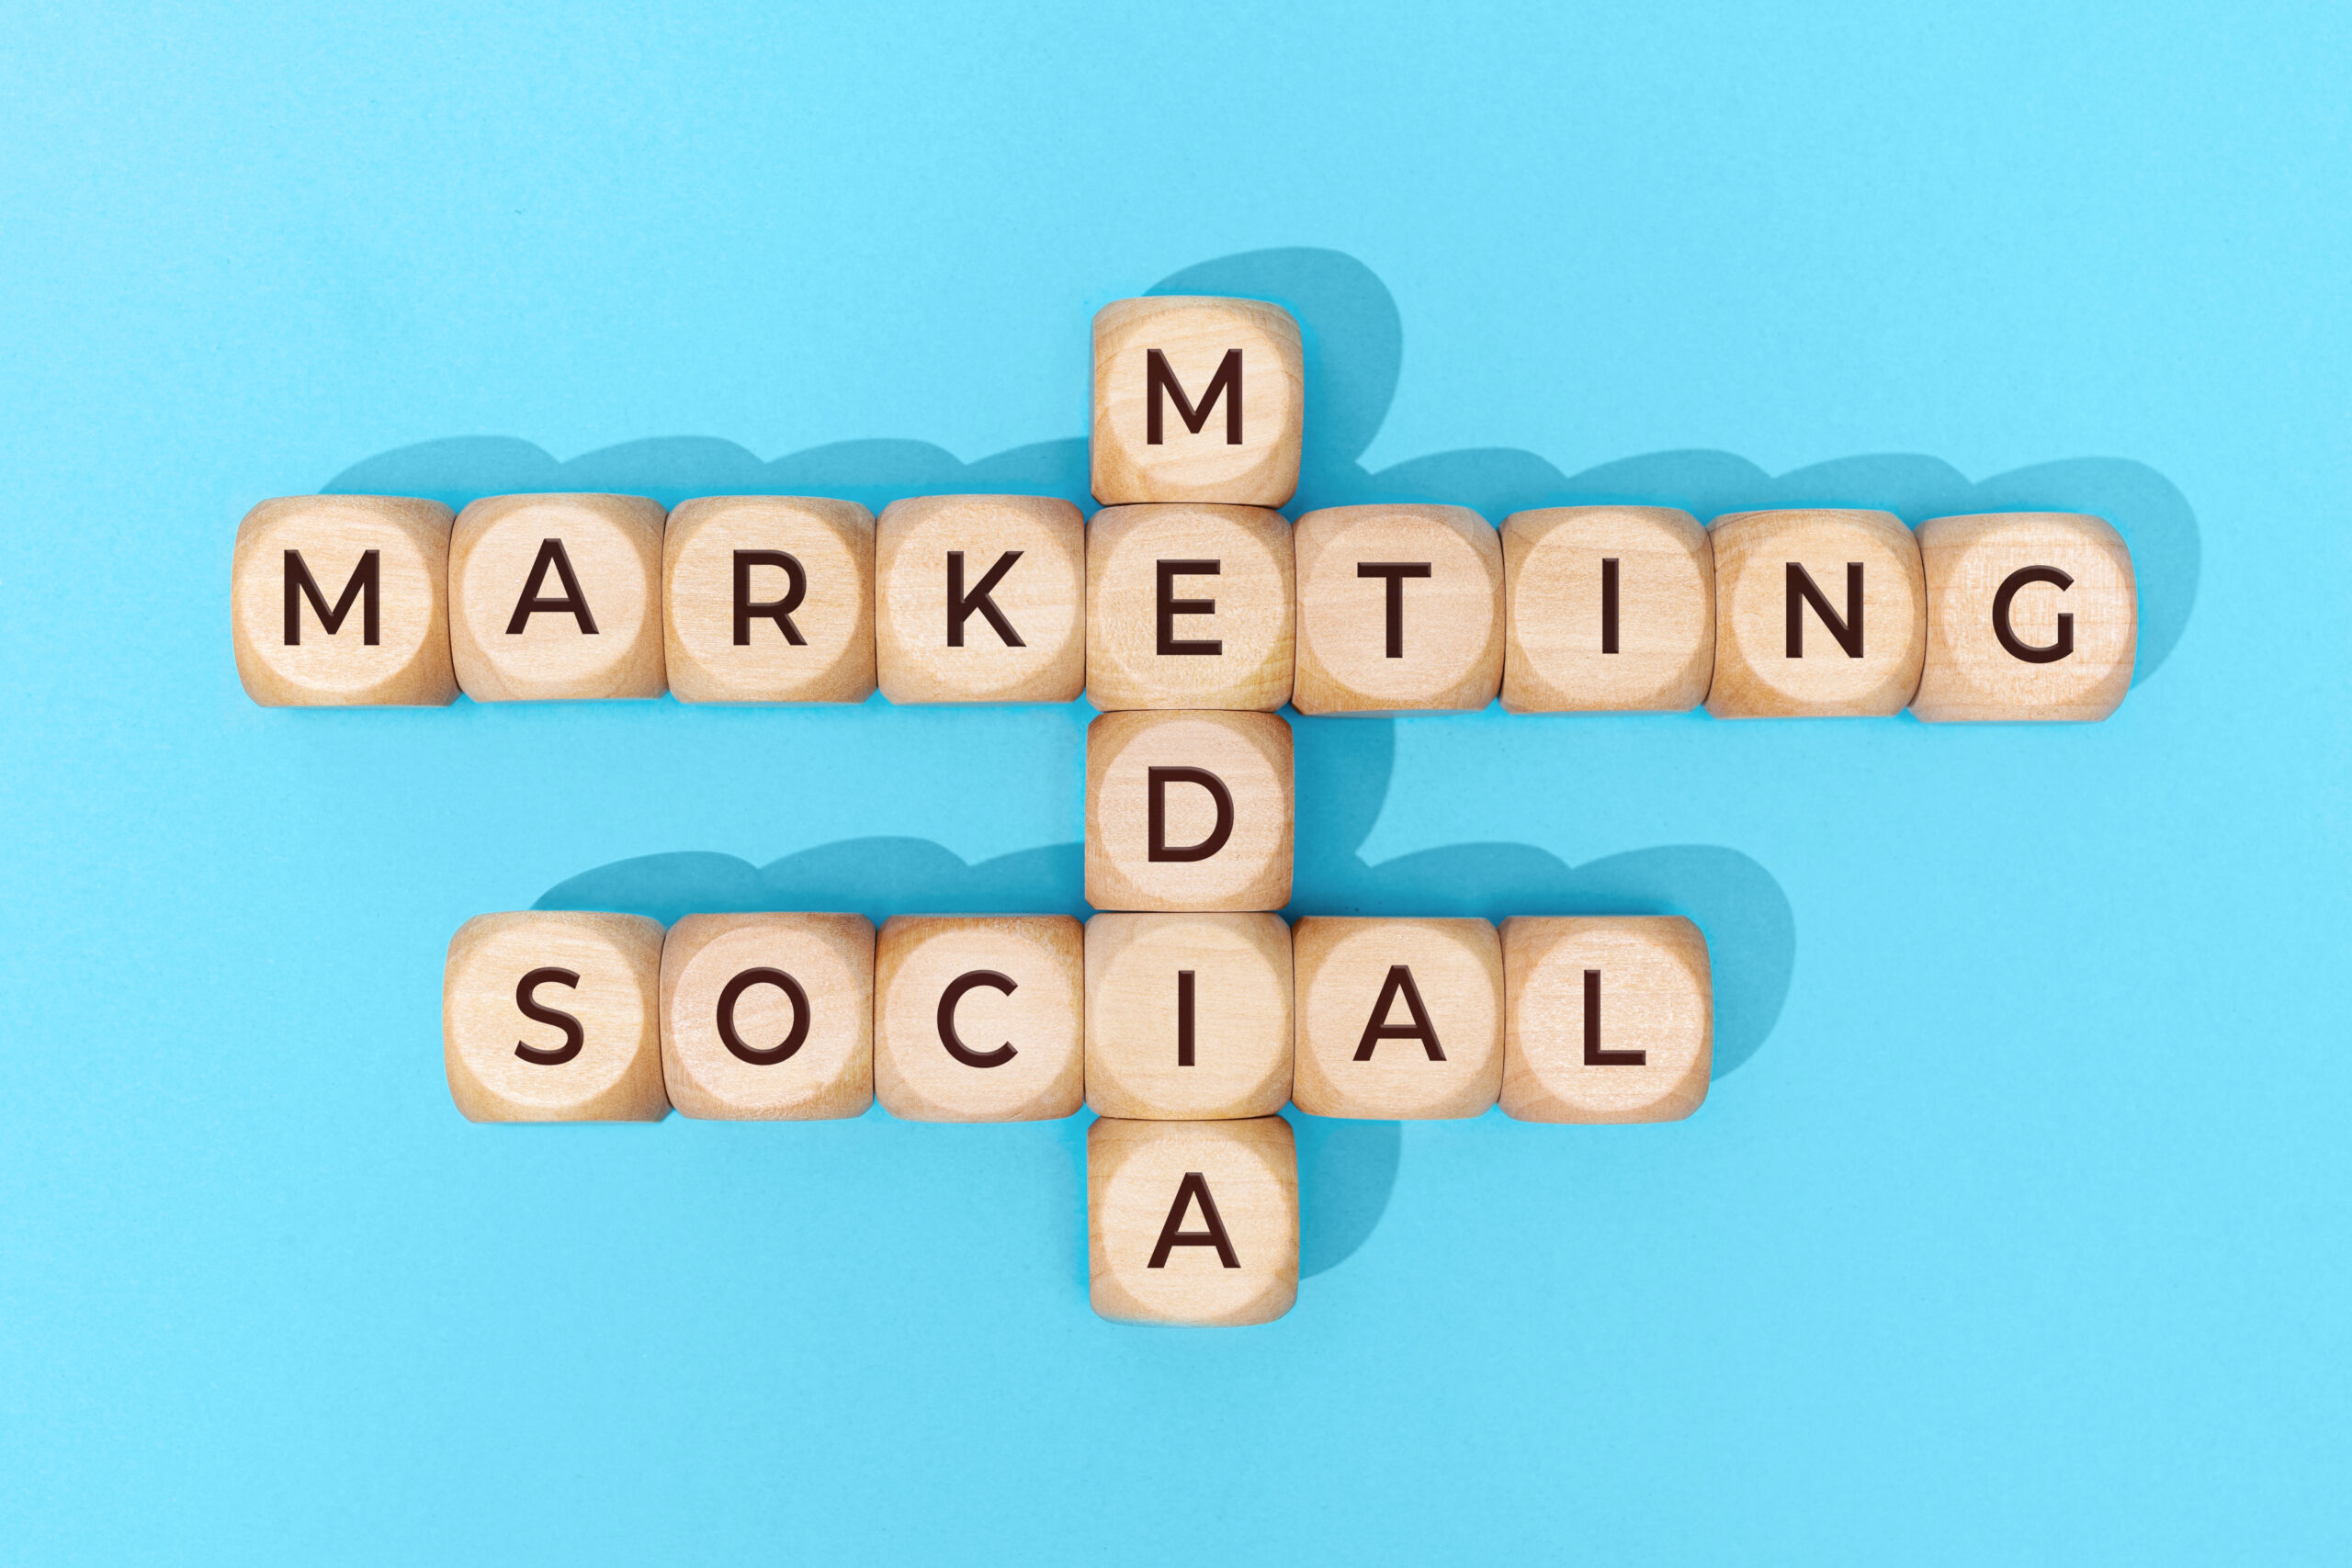 common social media marketing